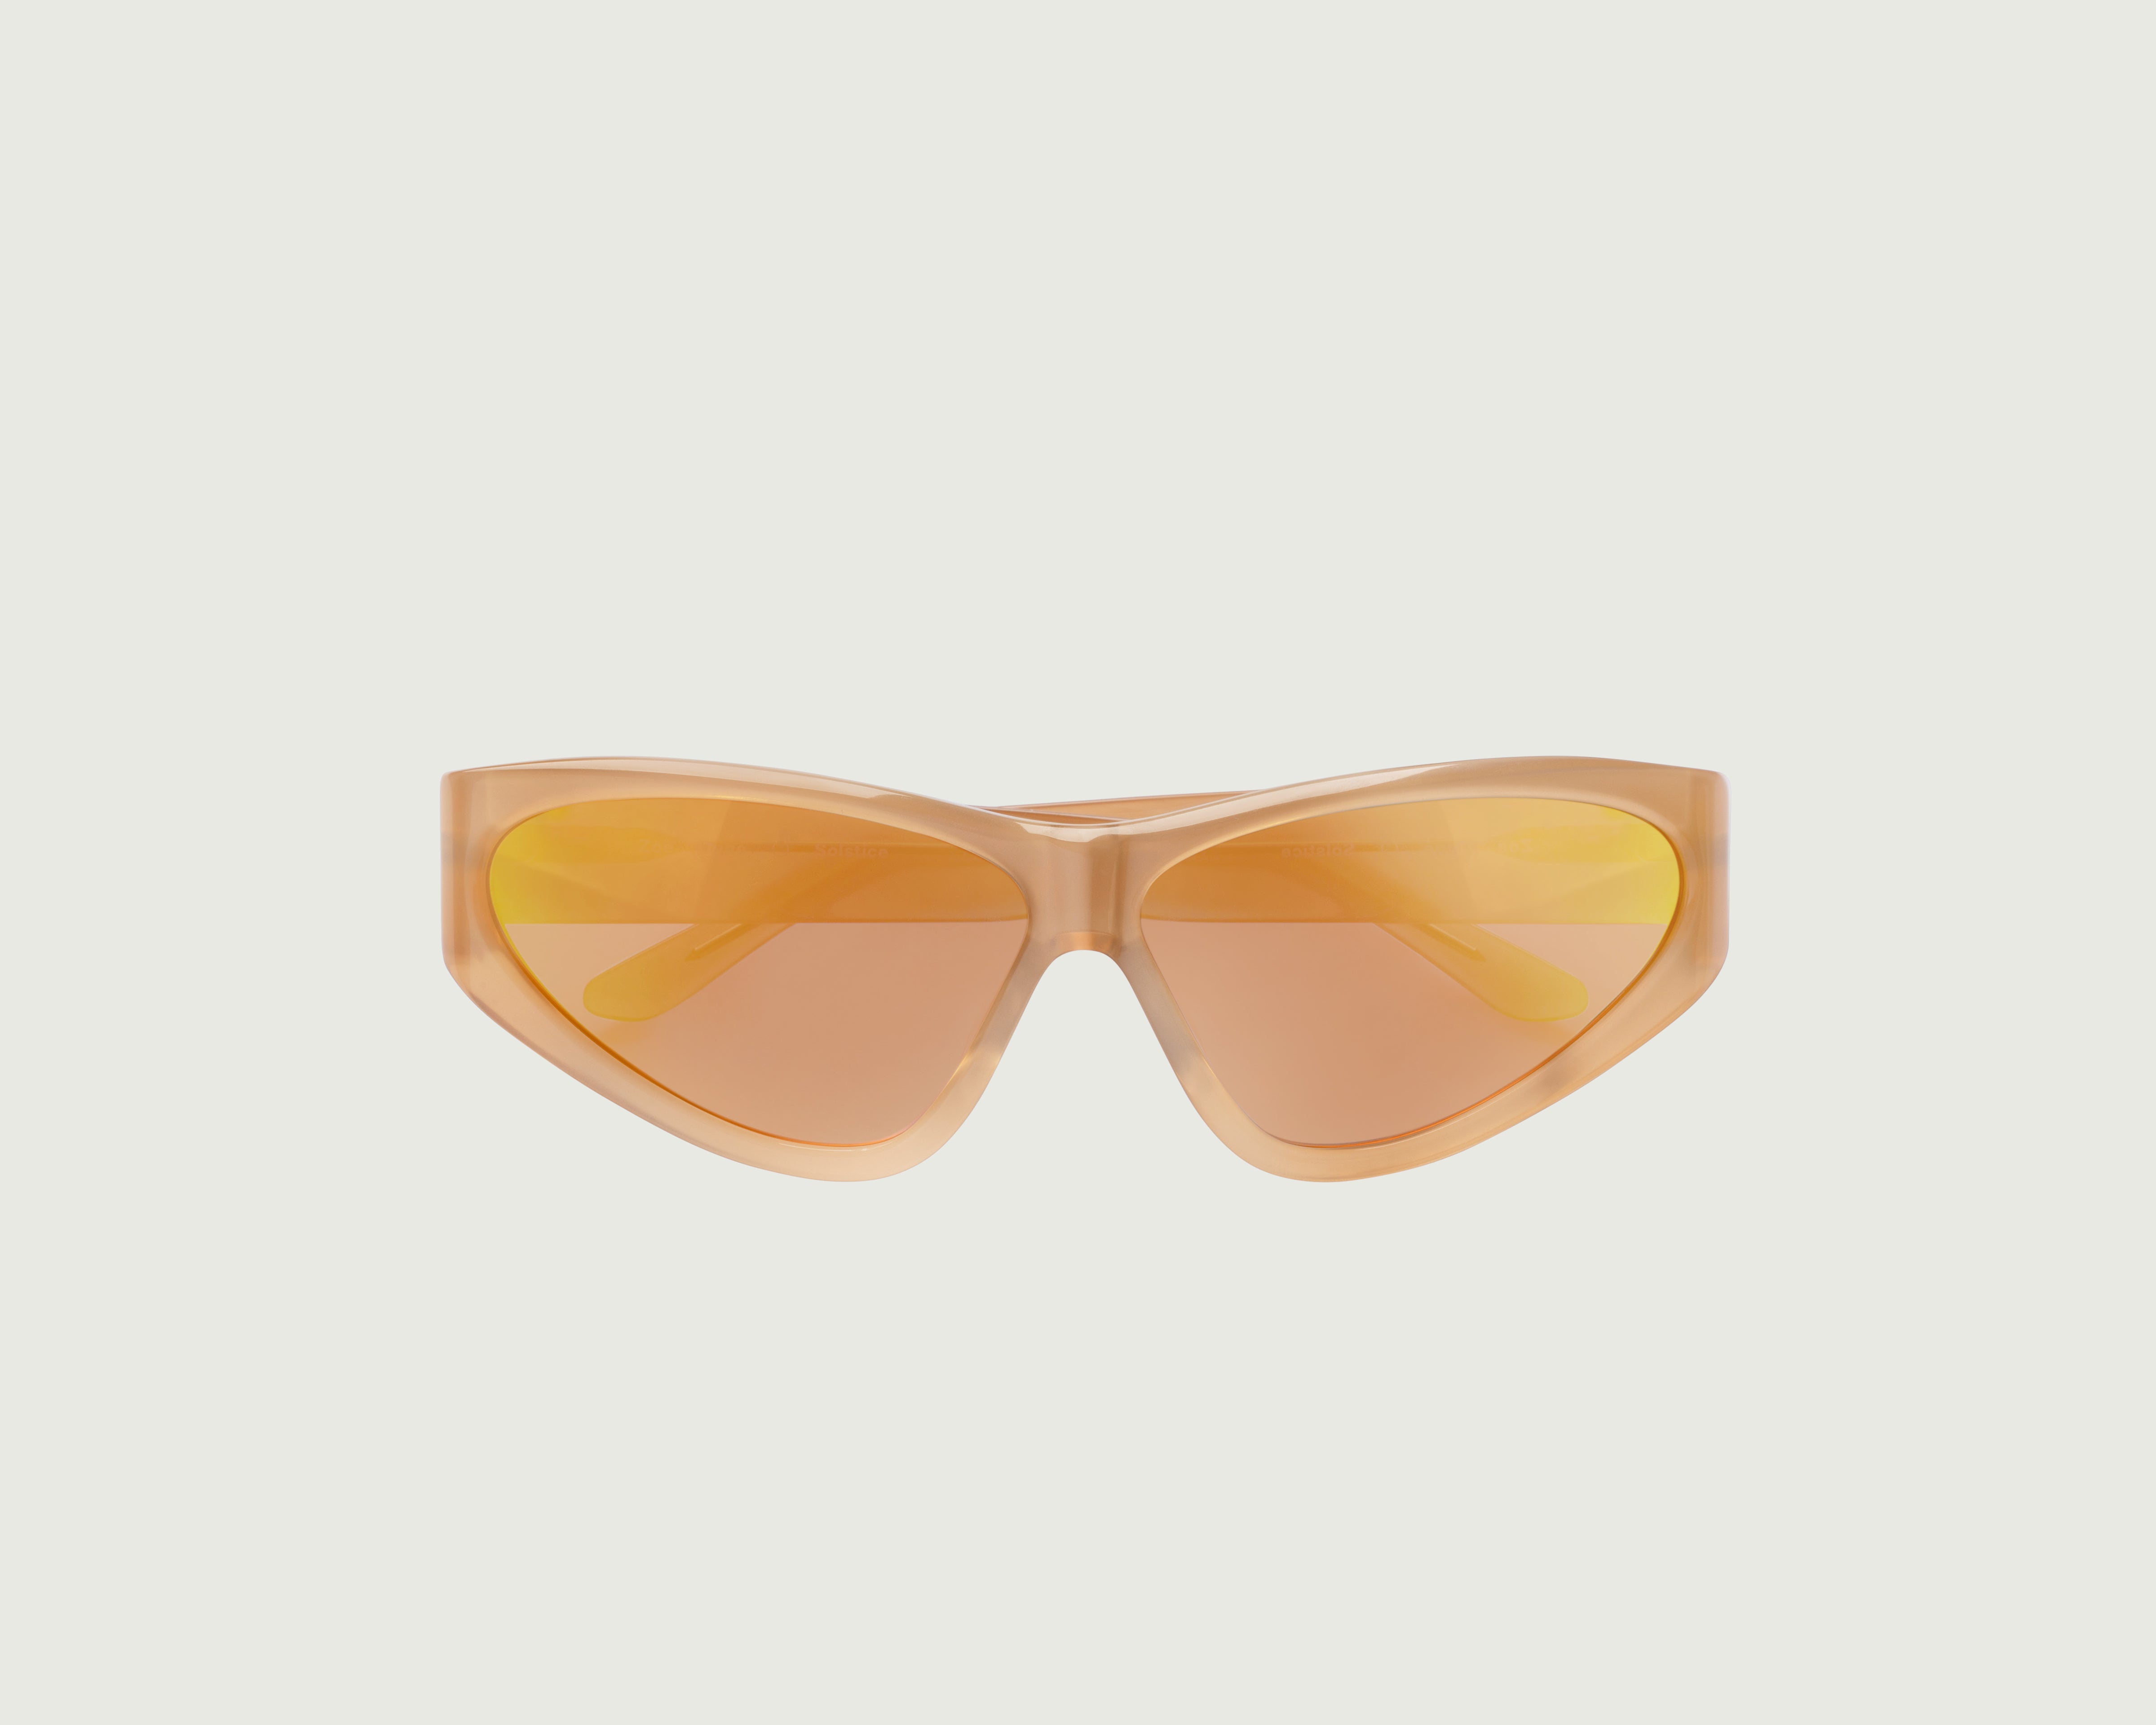 Dune::Zoe Sunglasses cateye orange acetate top